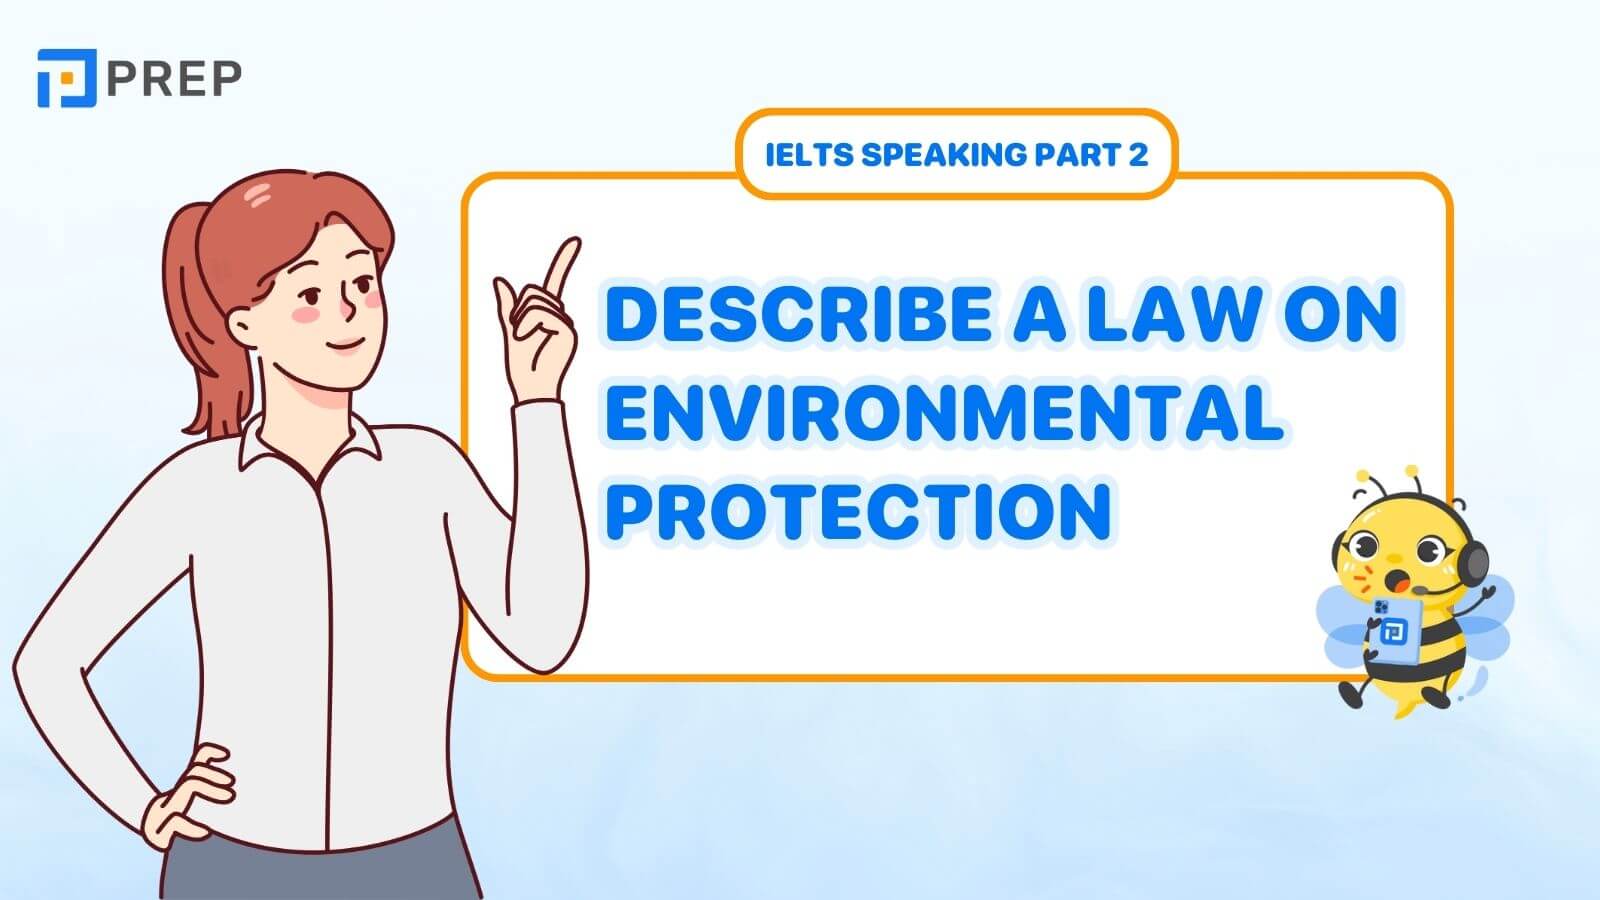 Describe a law on environment protection